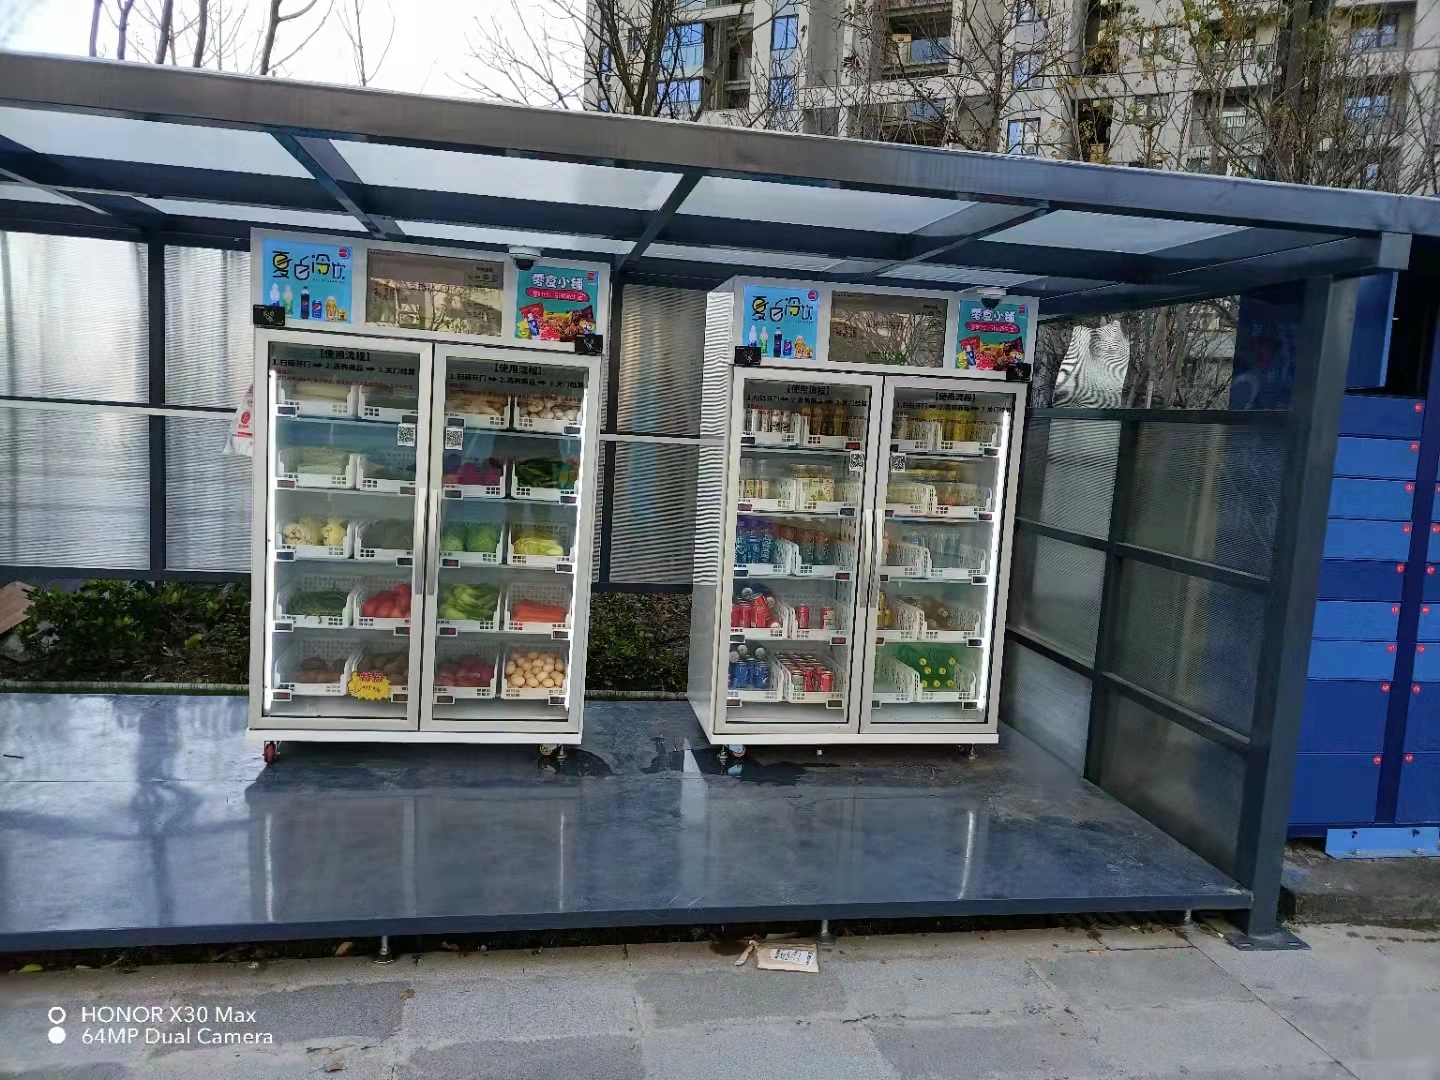 smart fridge vending machine